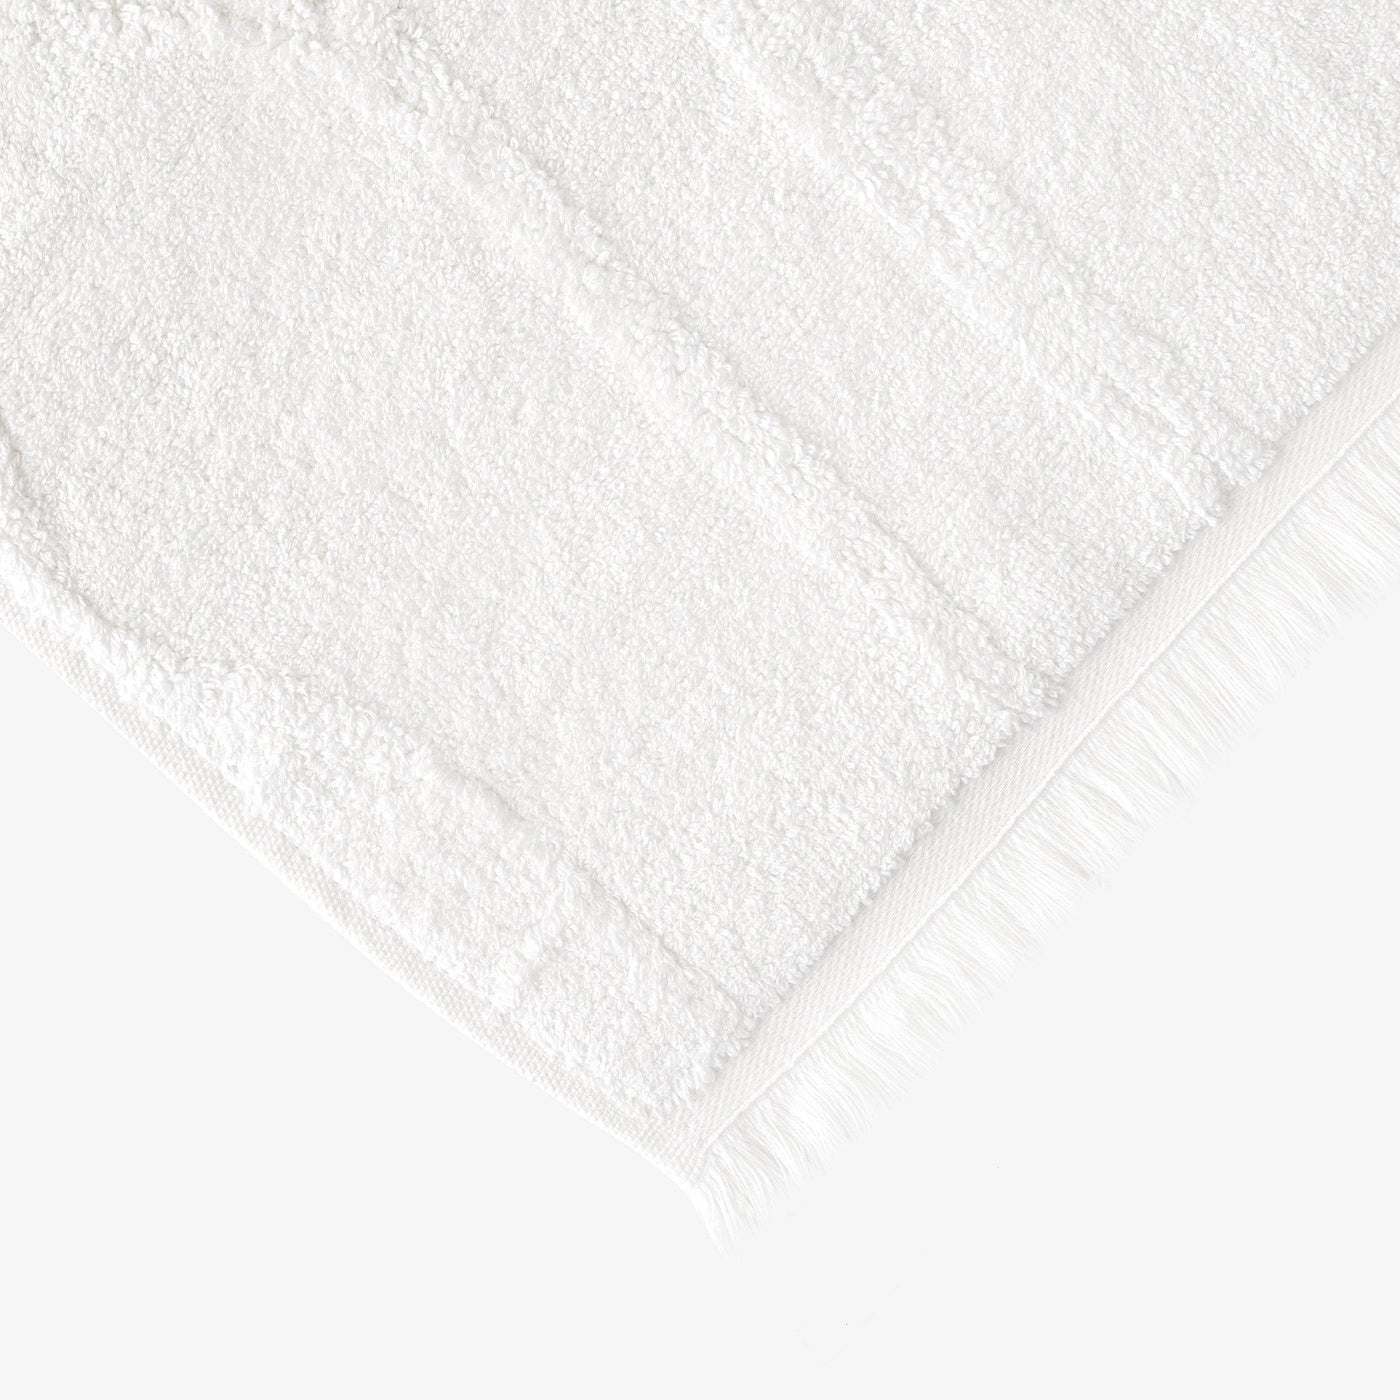 Barbara Jacquard Fringed 100% Turkish Cotton Hand Towel, Off-White Hand Towels sazy.com